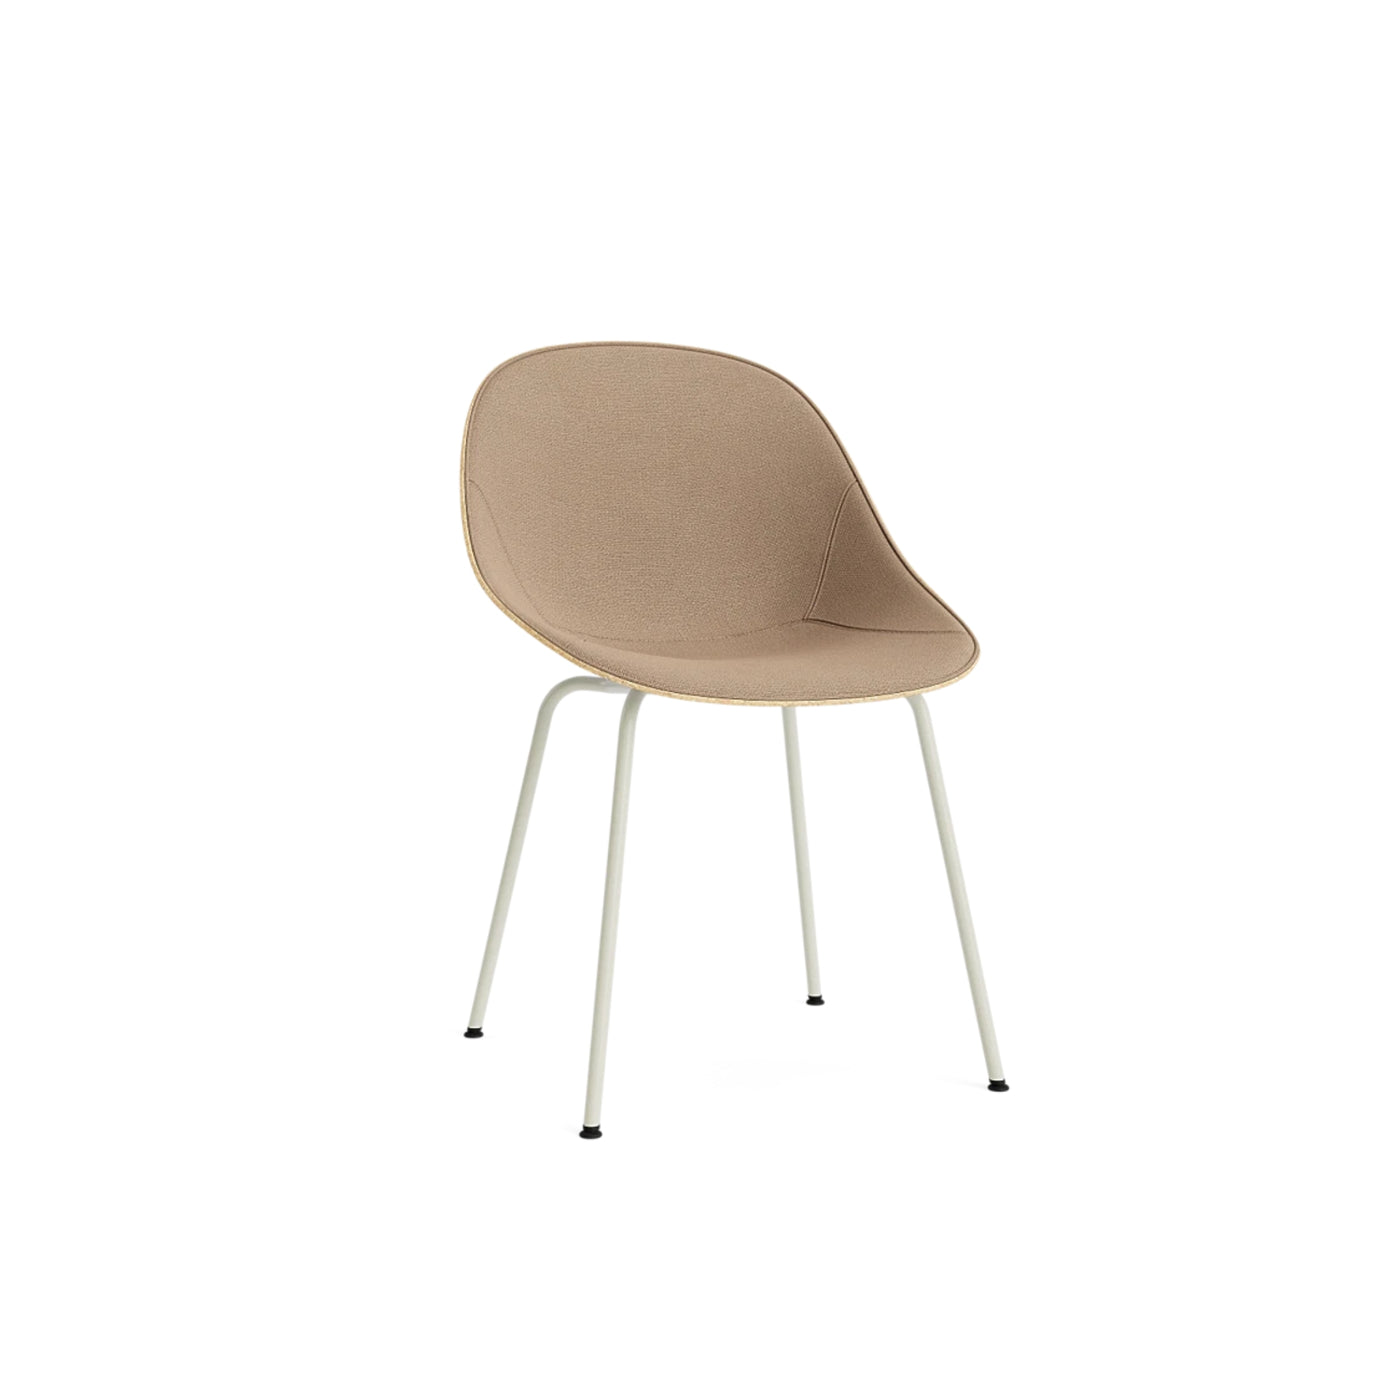 Normann Copenhagen Mat Chair at someday designs. #colour_hallingdal-224